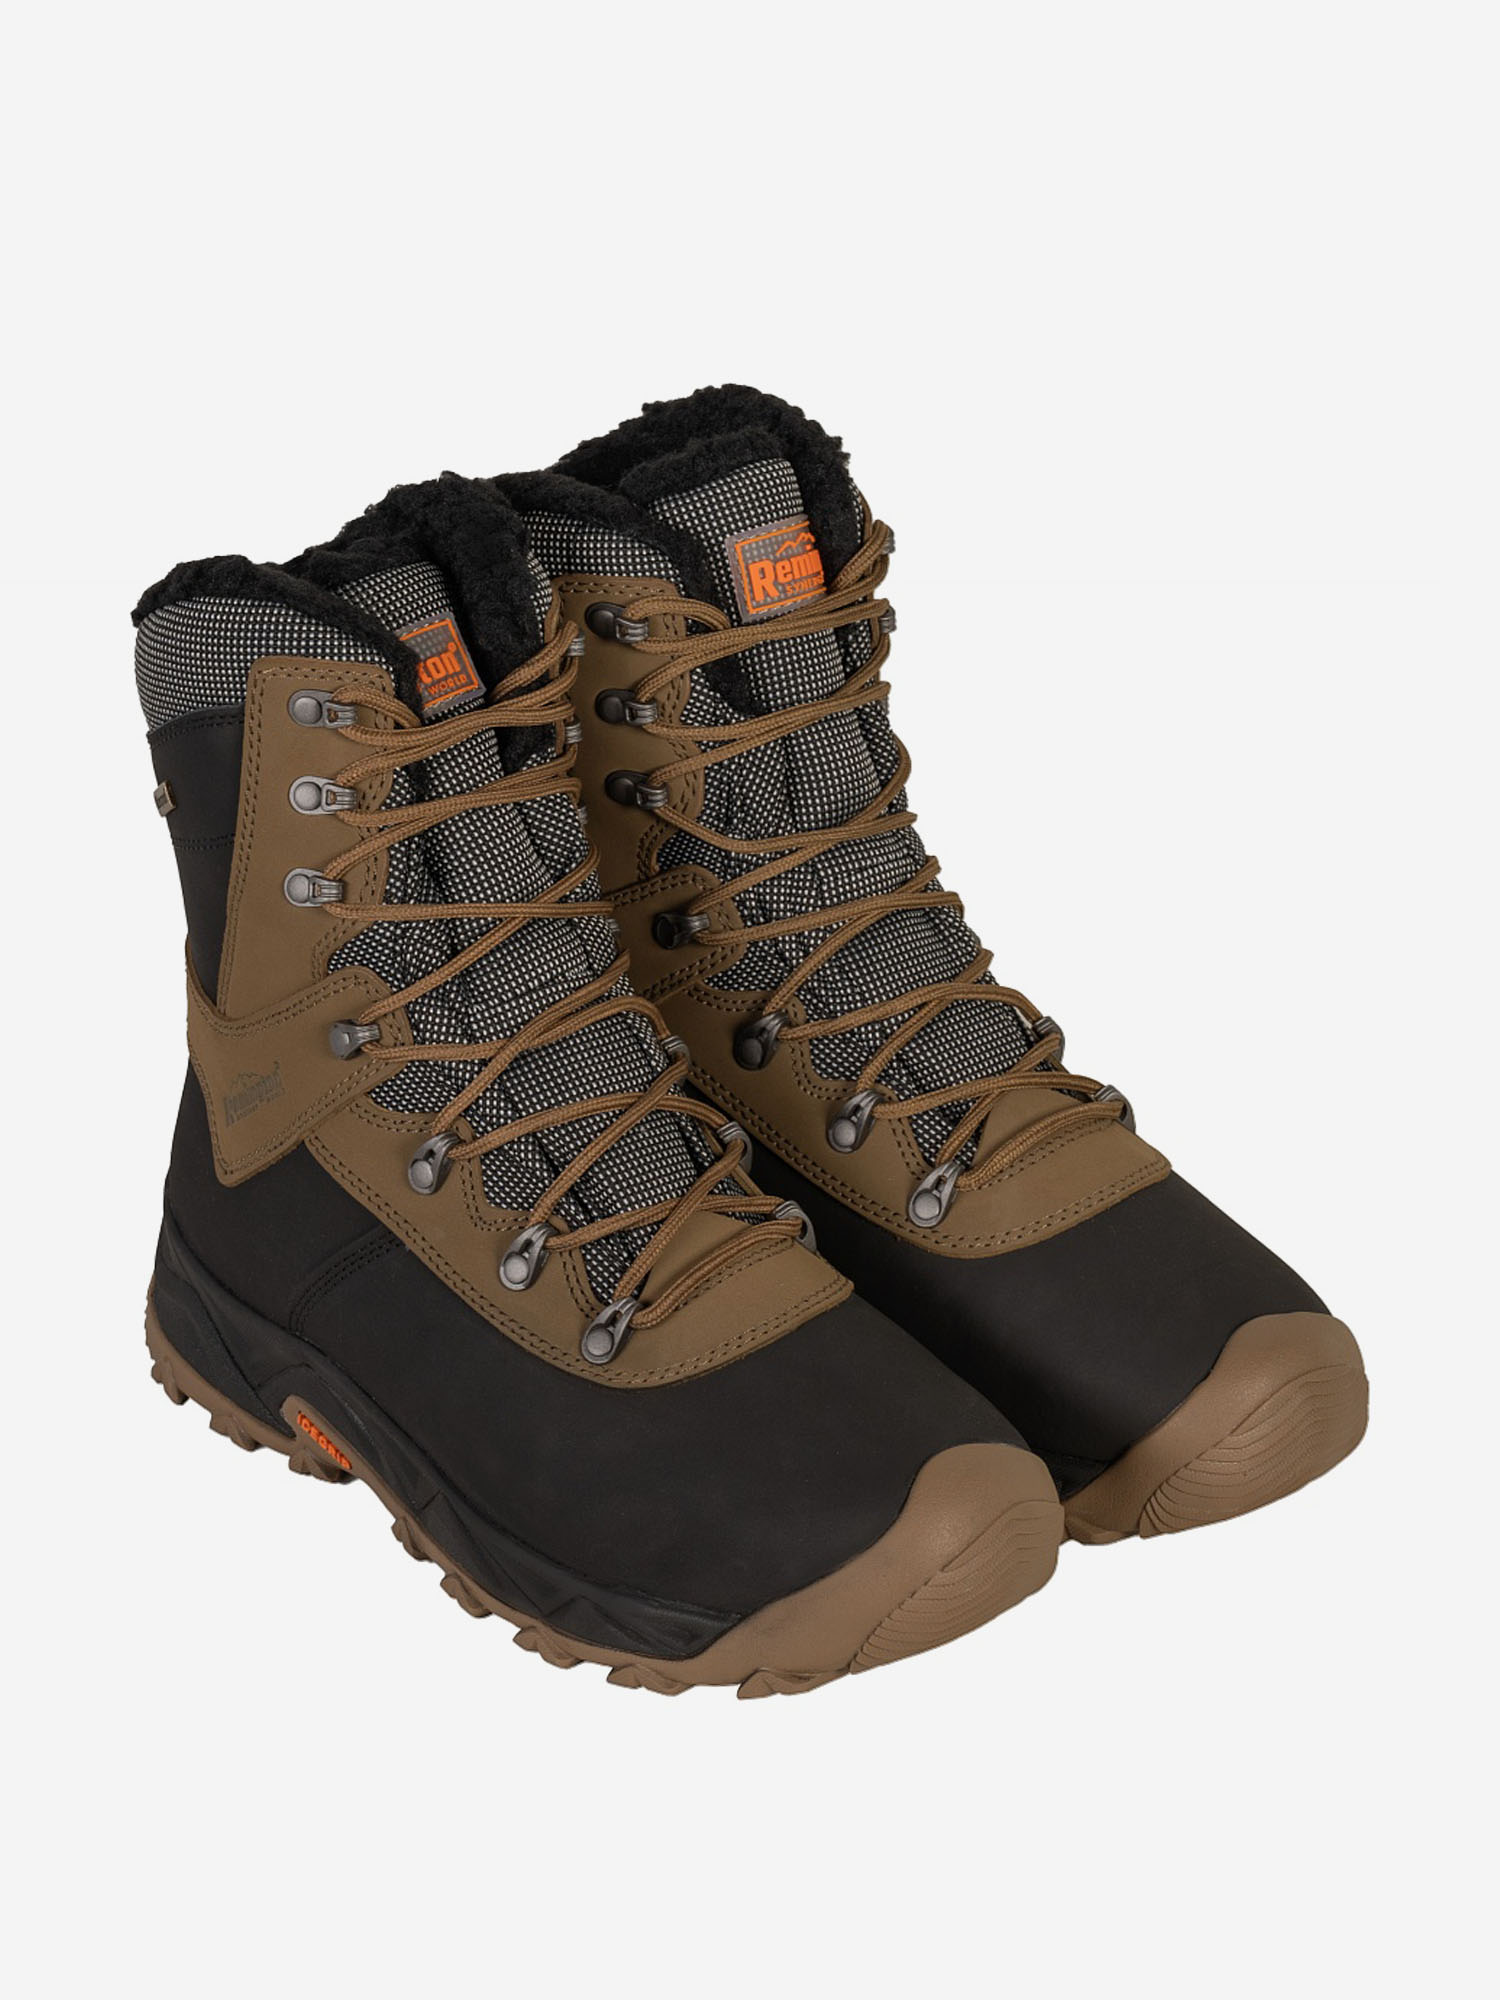 Ботинки Remington Urban Trekking Boots Brown 400g Thinsulate, Коричневый